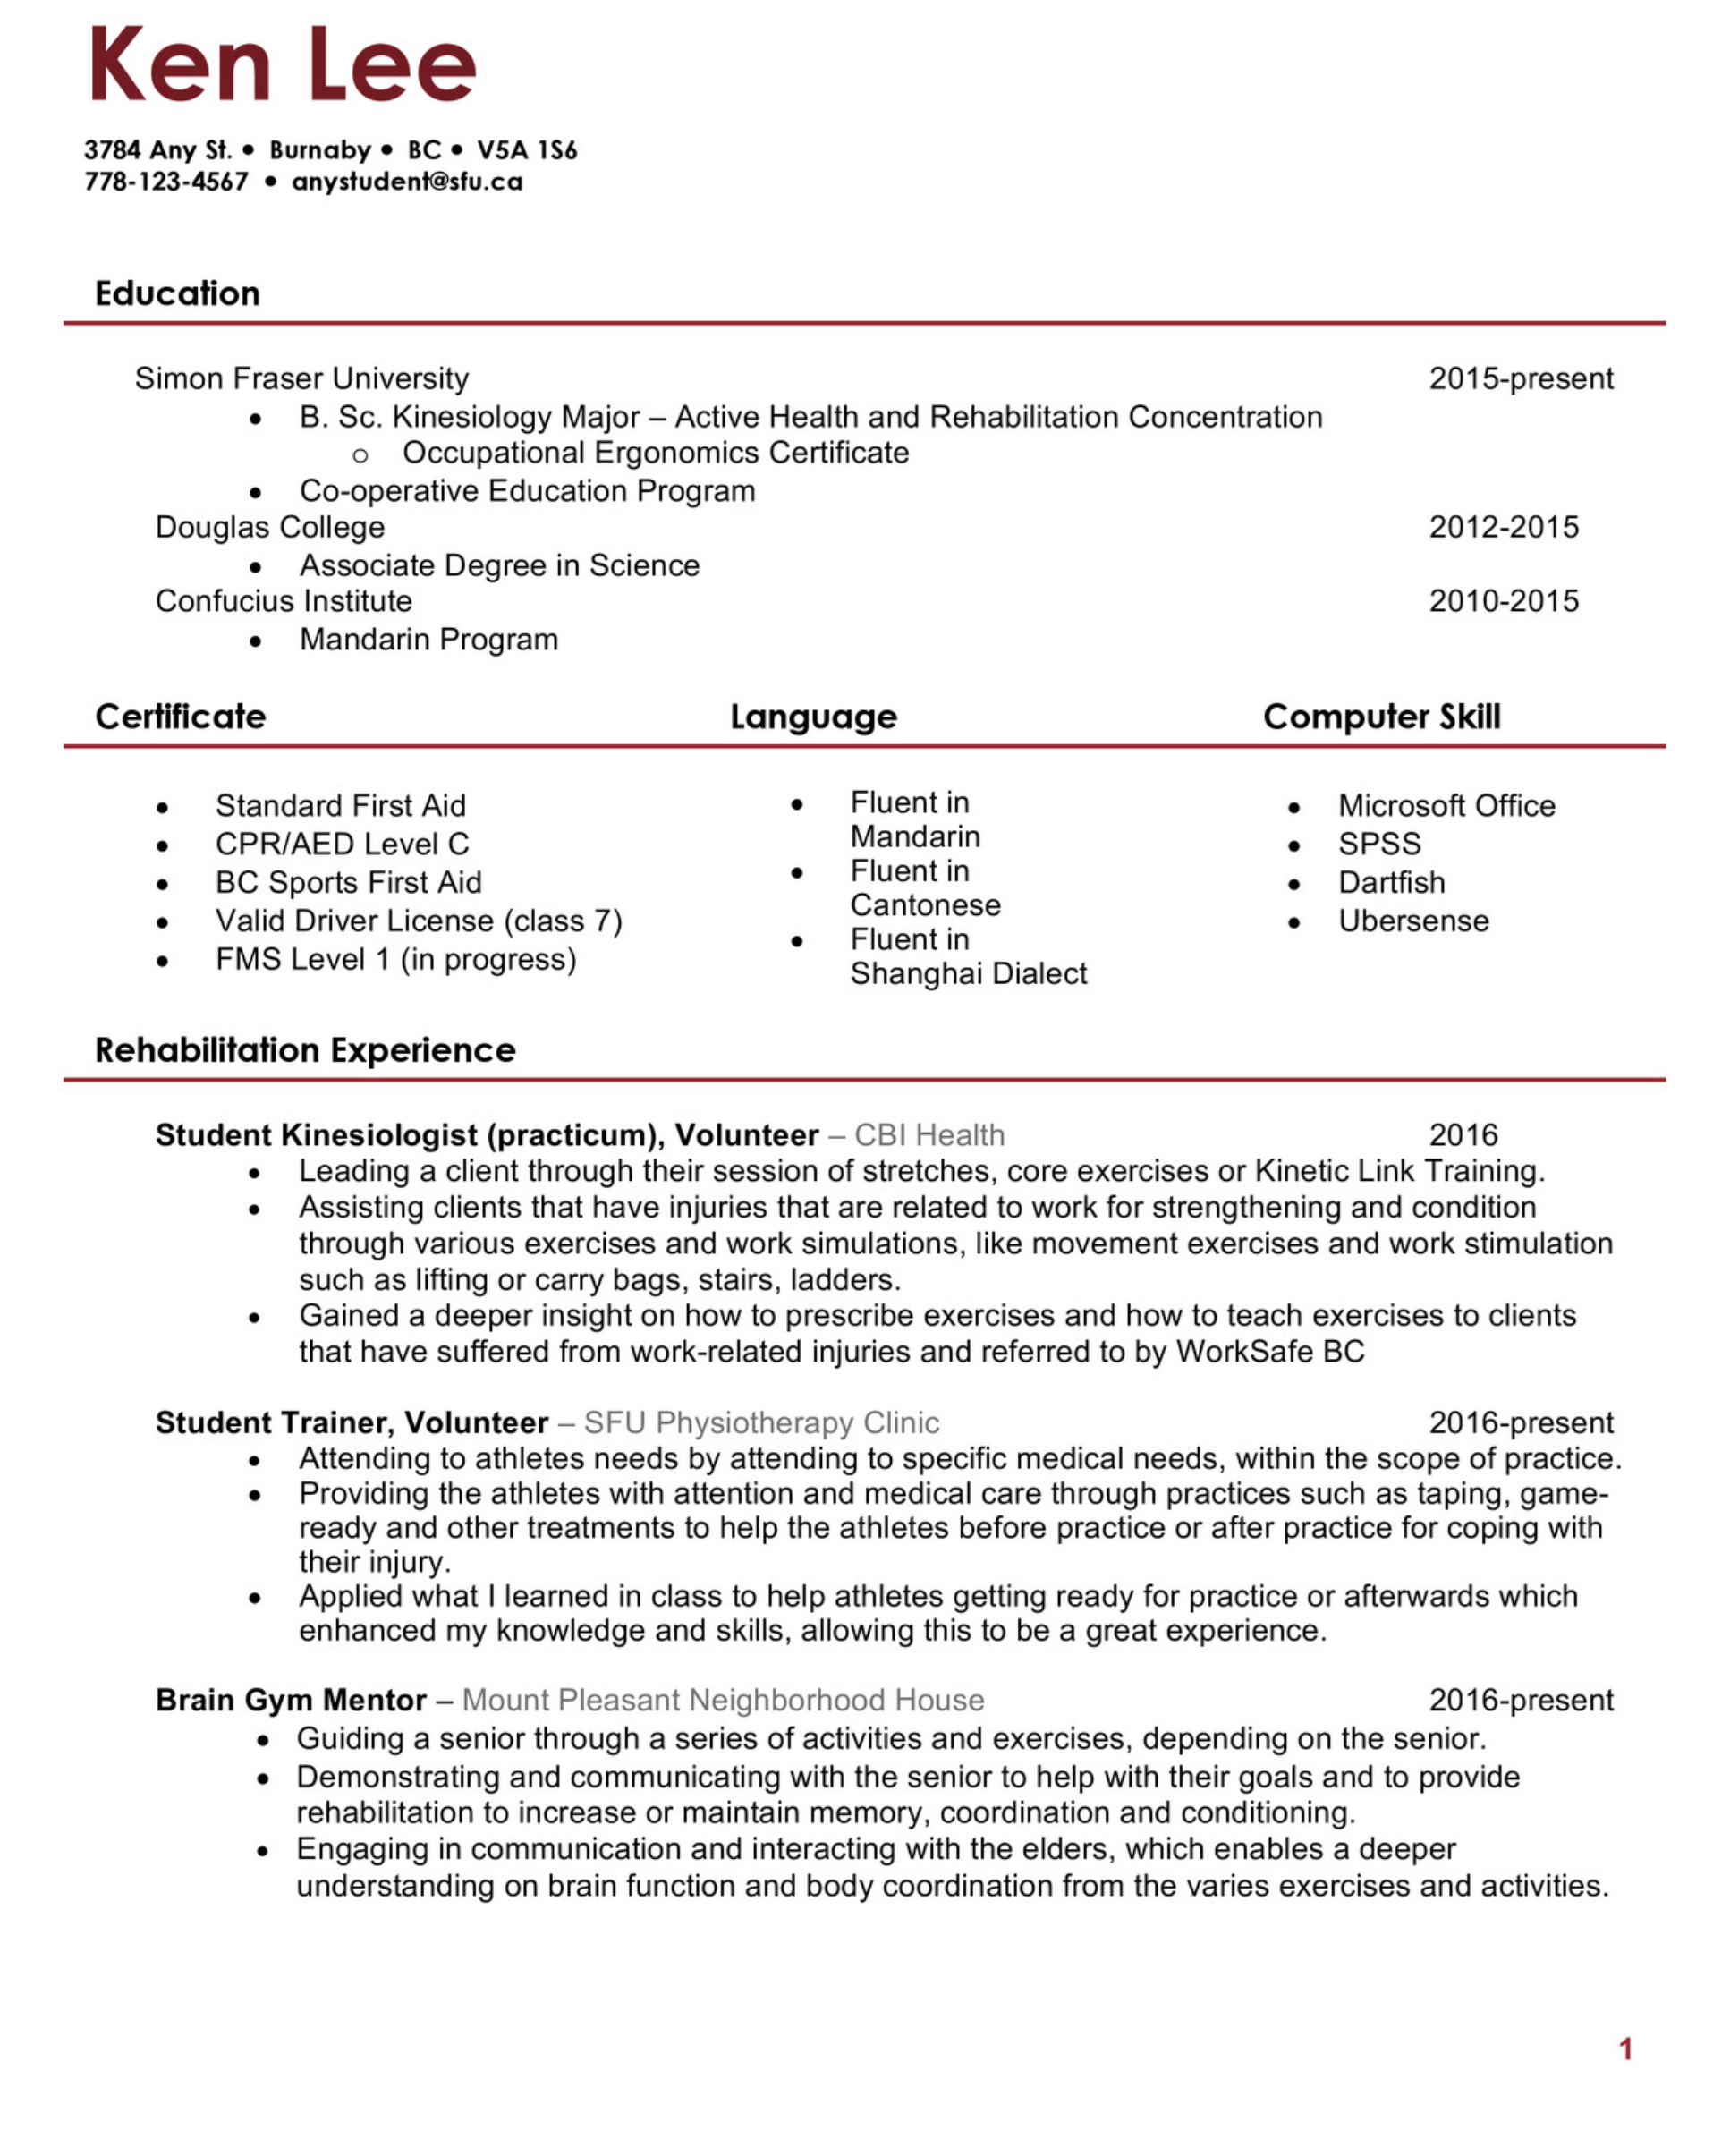 BPK Resume Sample page 1